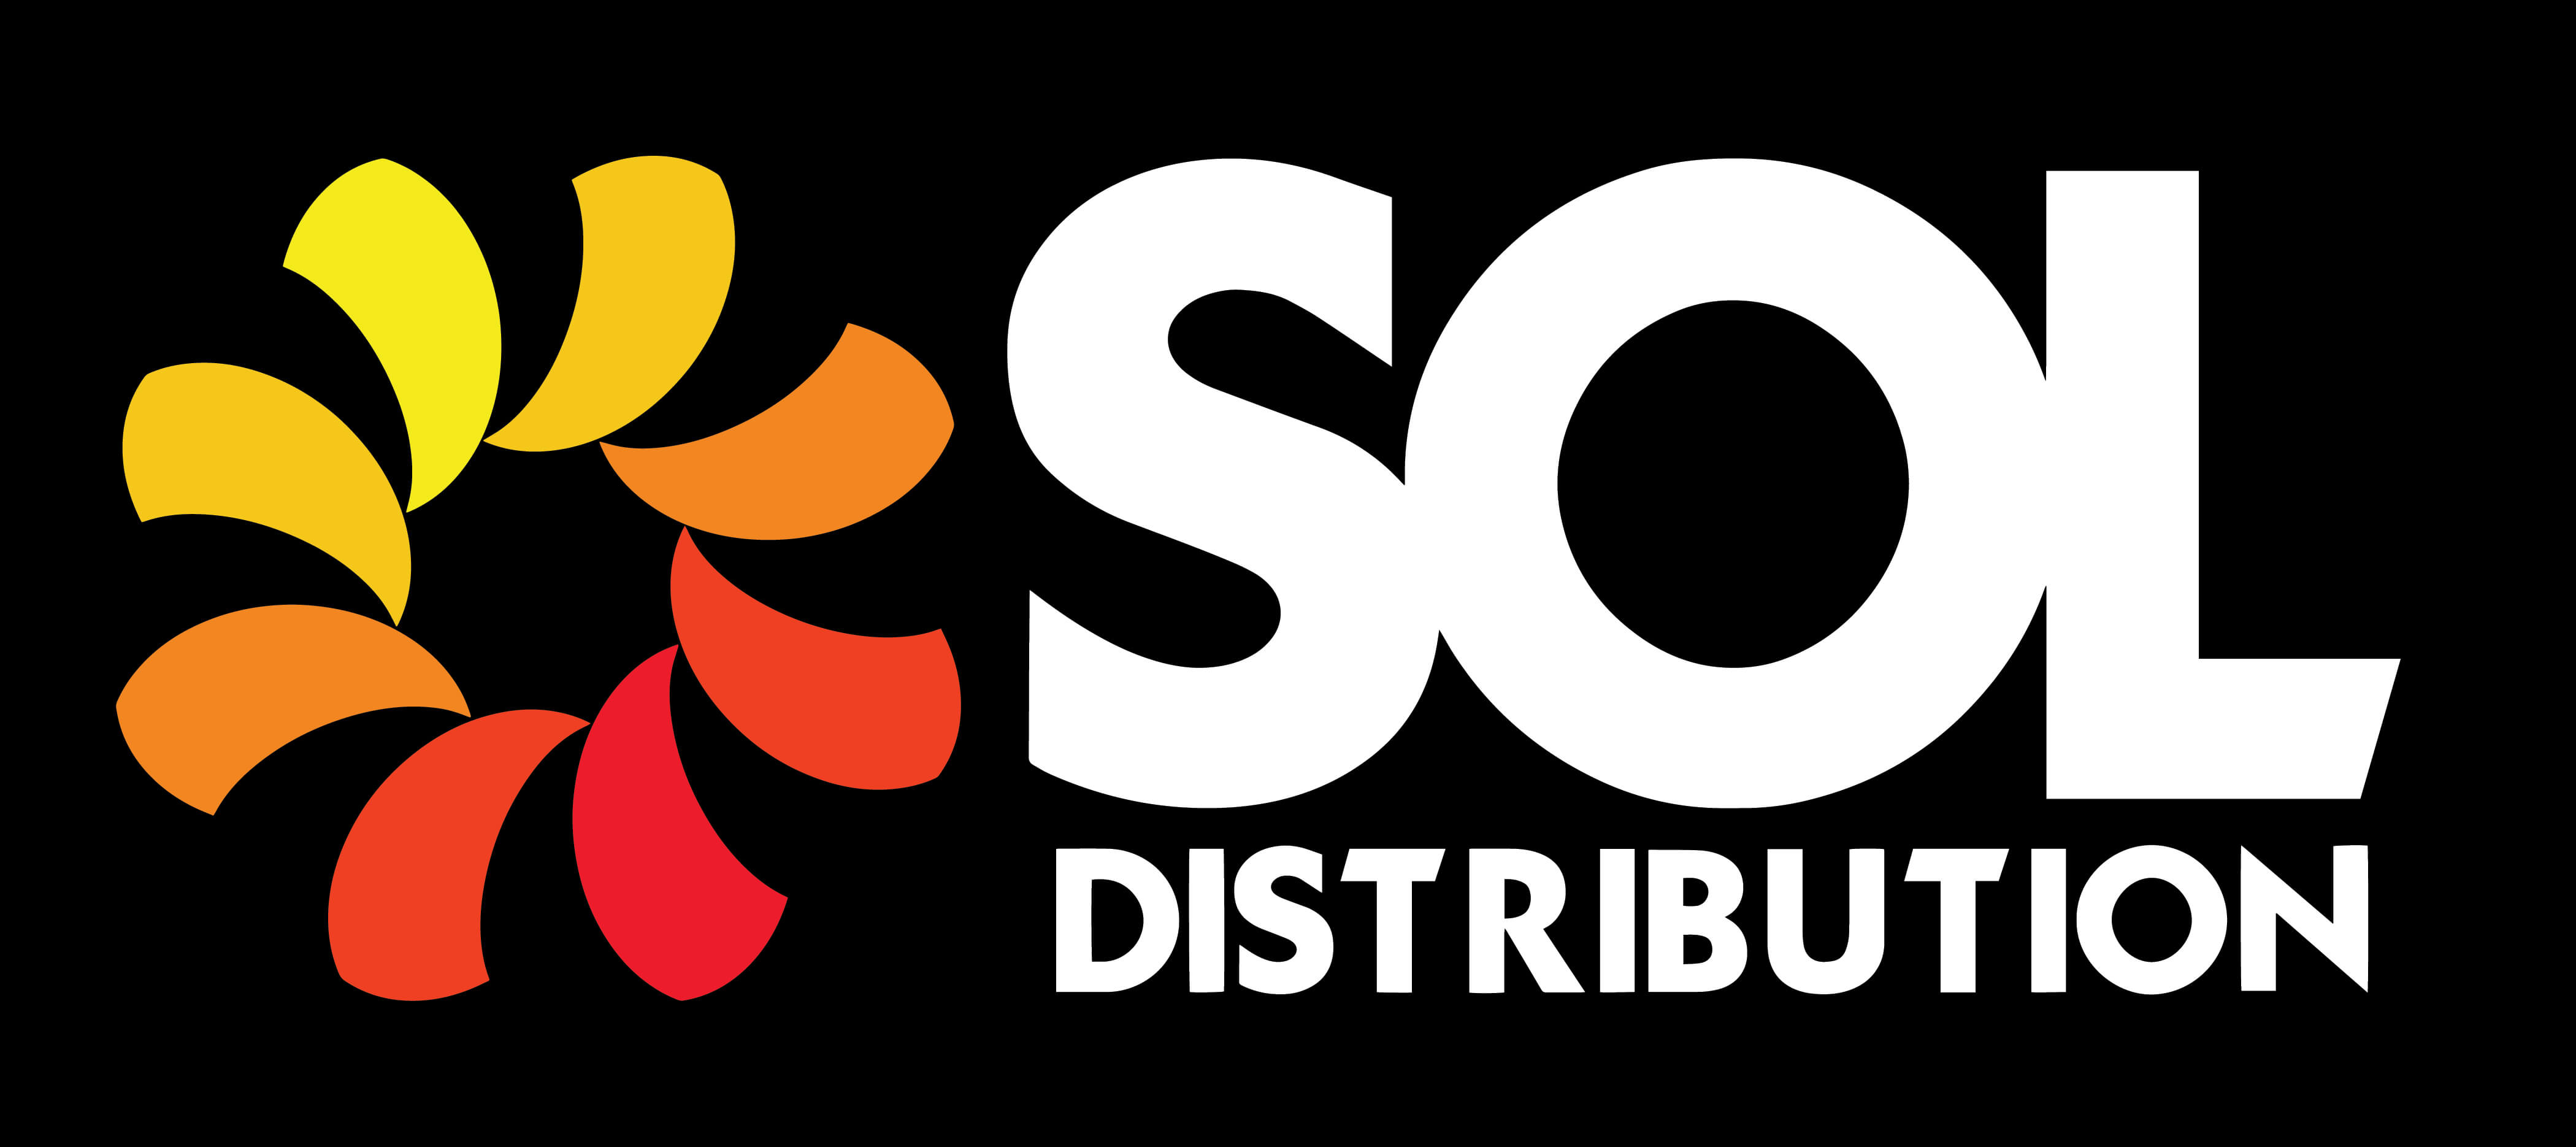 Sol distribution